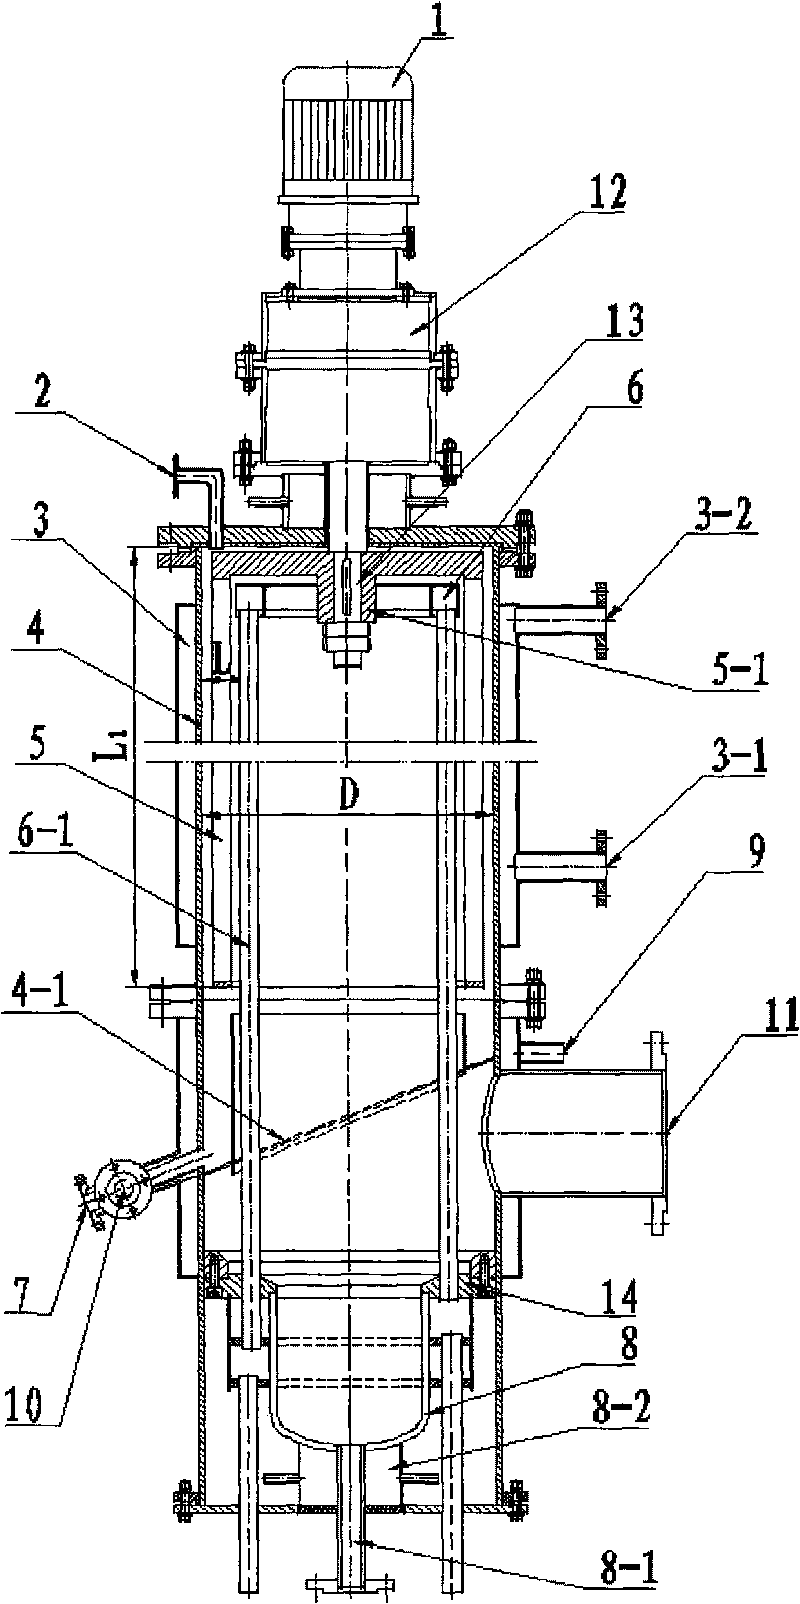 Molecular distillation apparatus